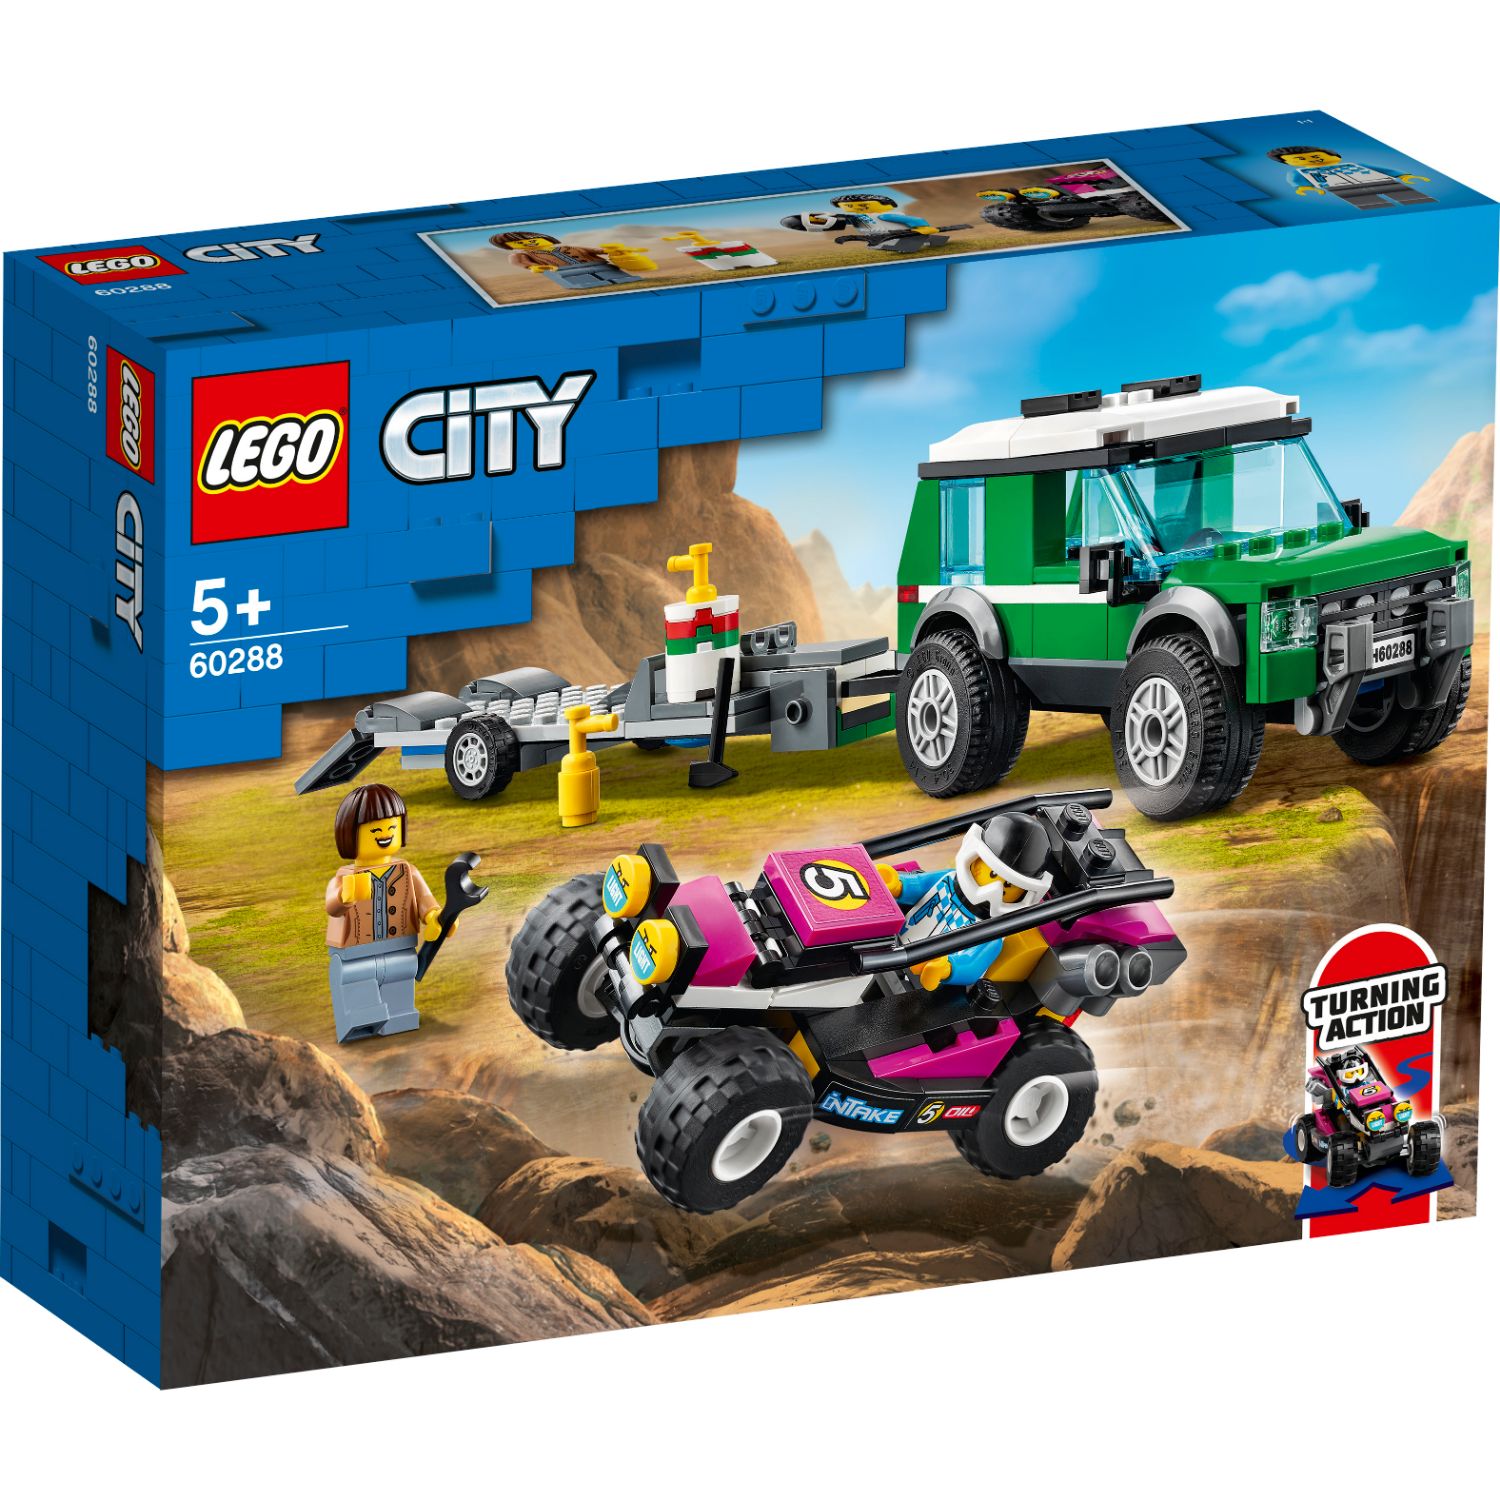 LEGO CITY 60288 RACE BUGGY TRANSPORTER